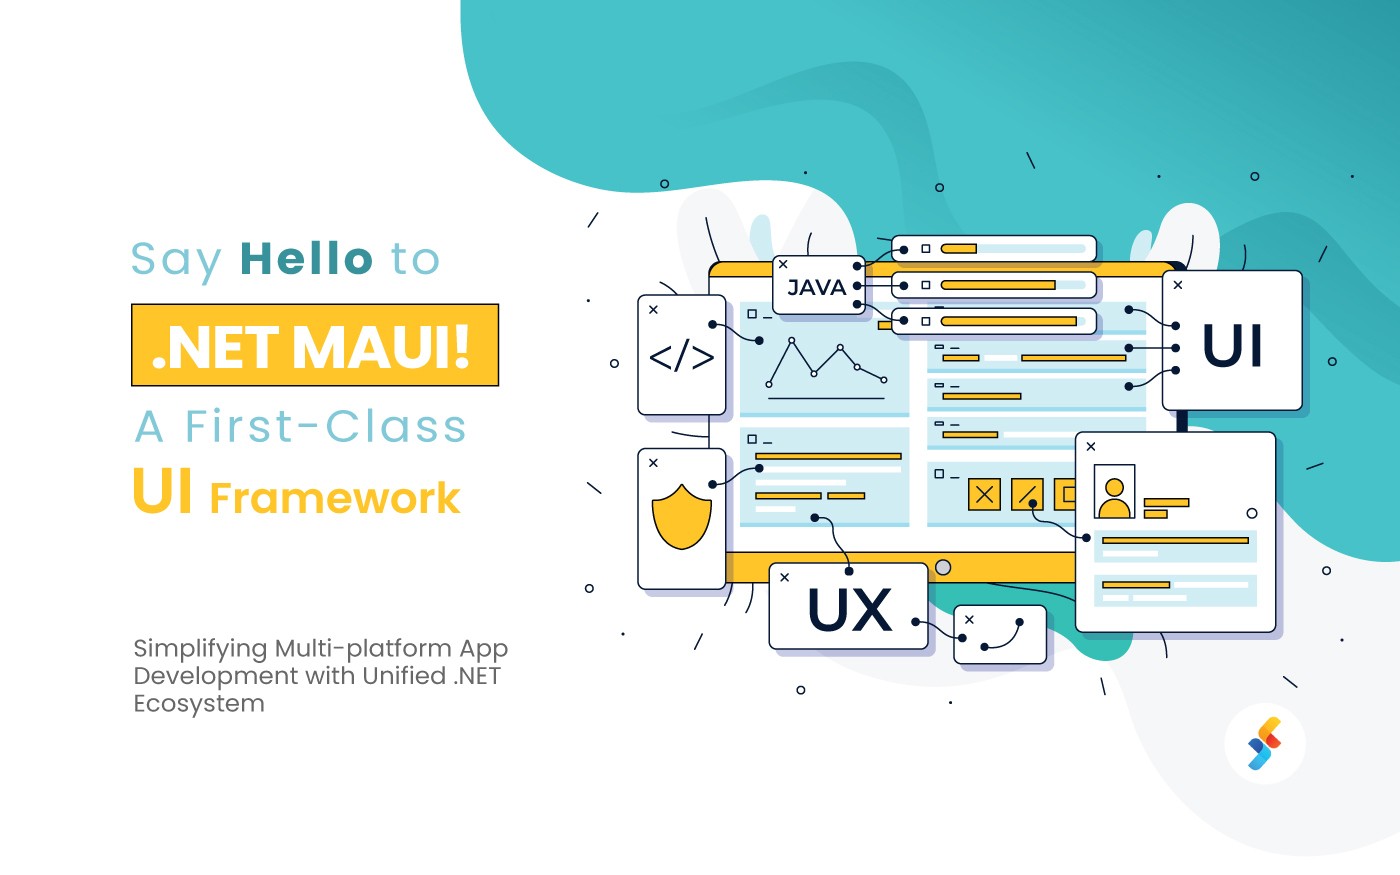 Say Hello to .NET MAUI! A First-Class UI Framework